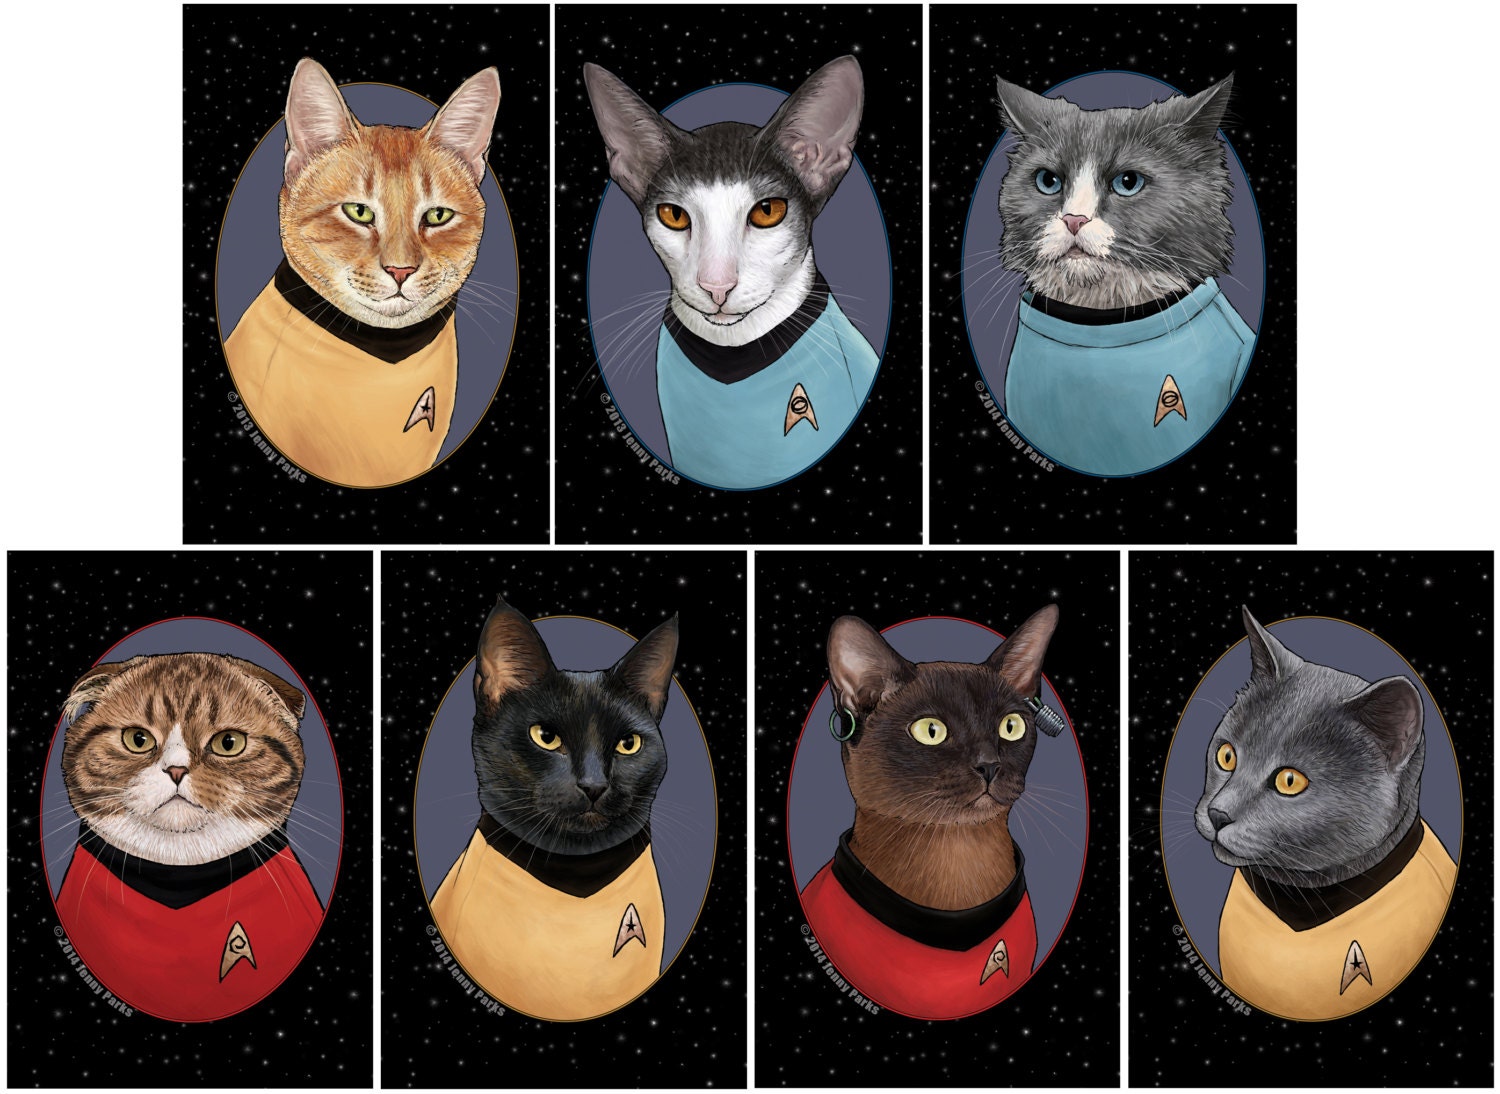 Star Trek Cat Postcards by jennyparksillus on Etsy